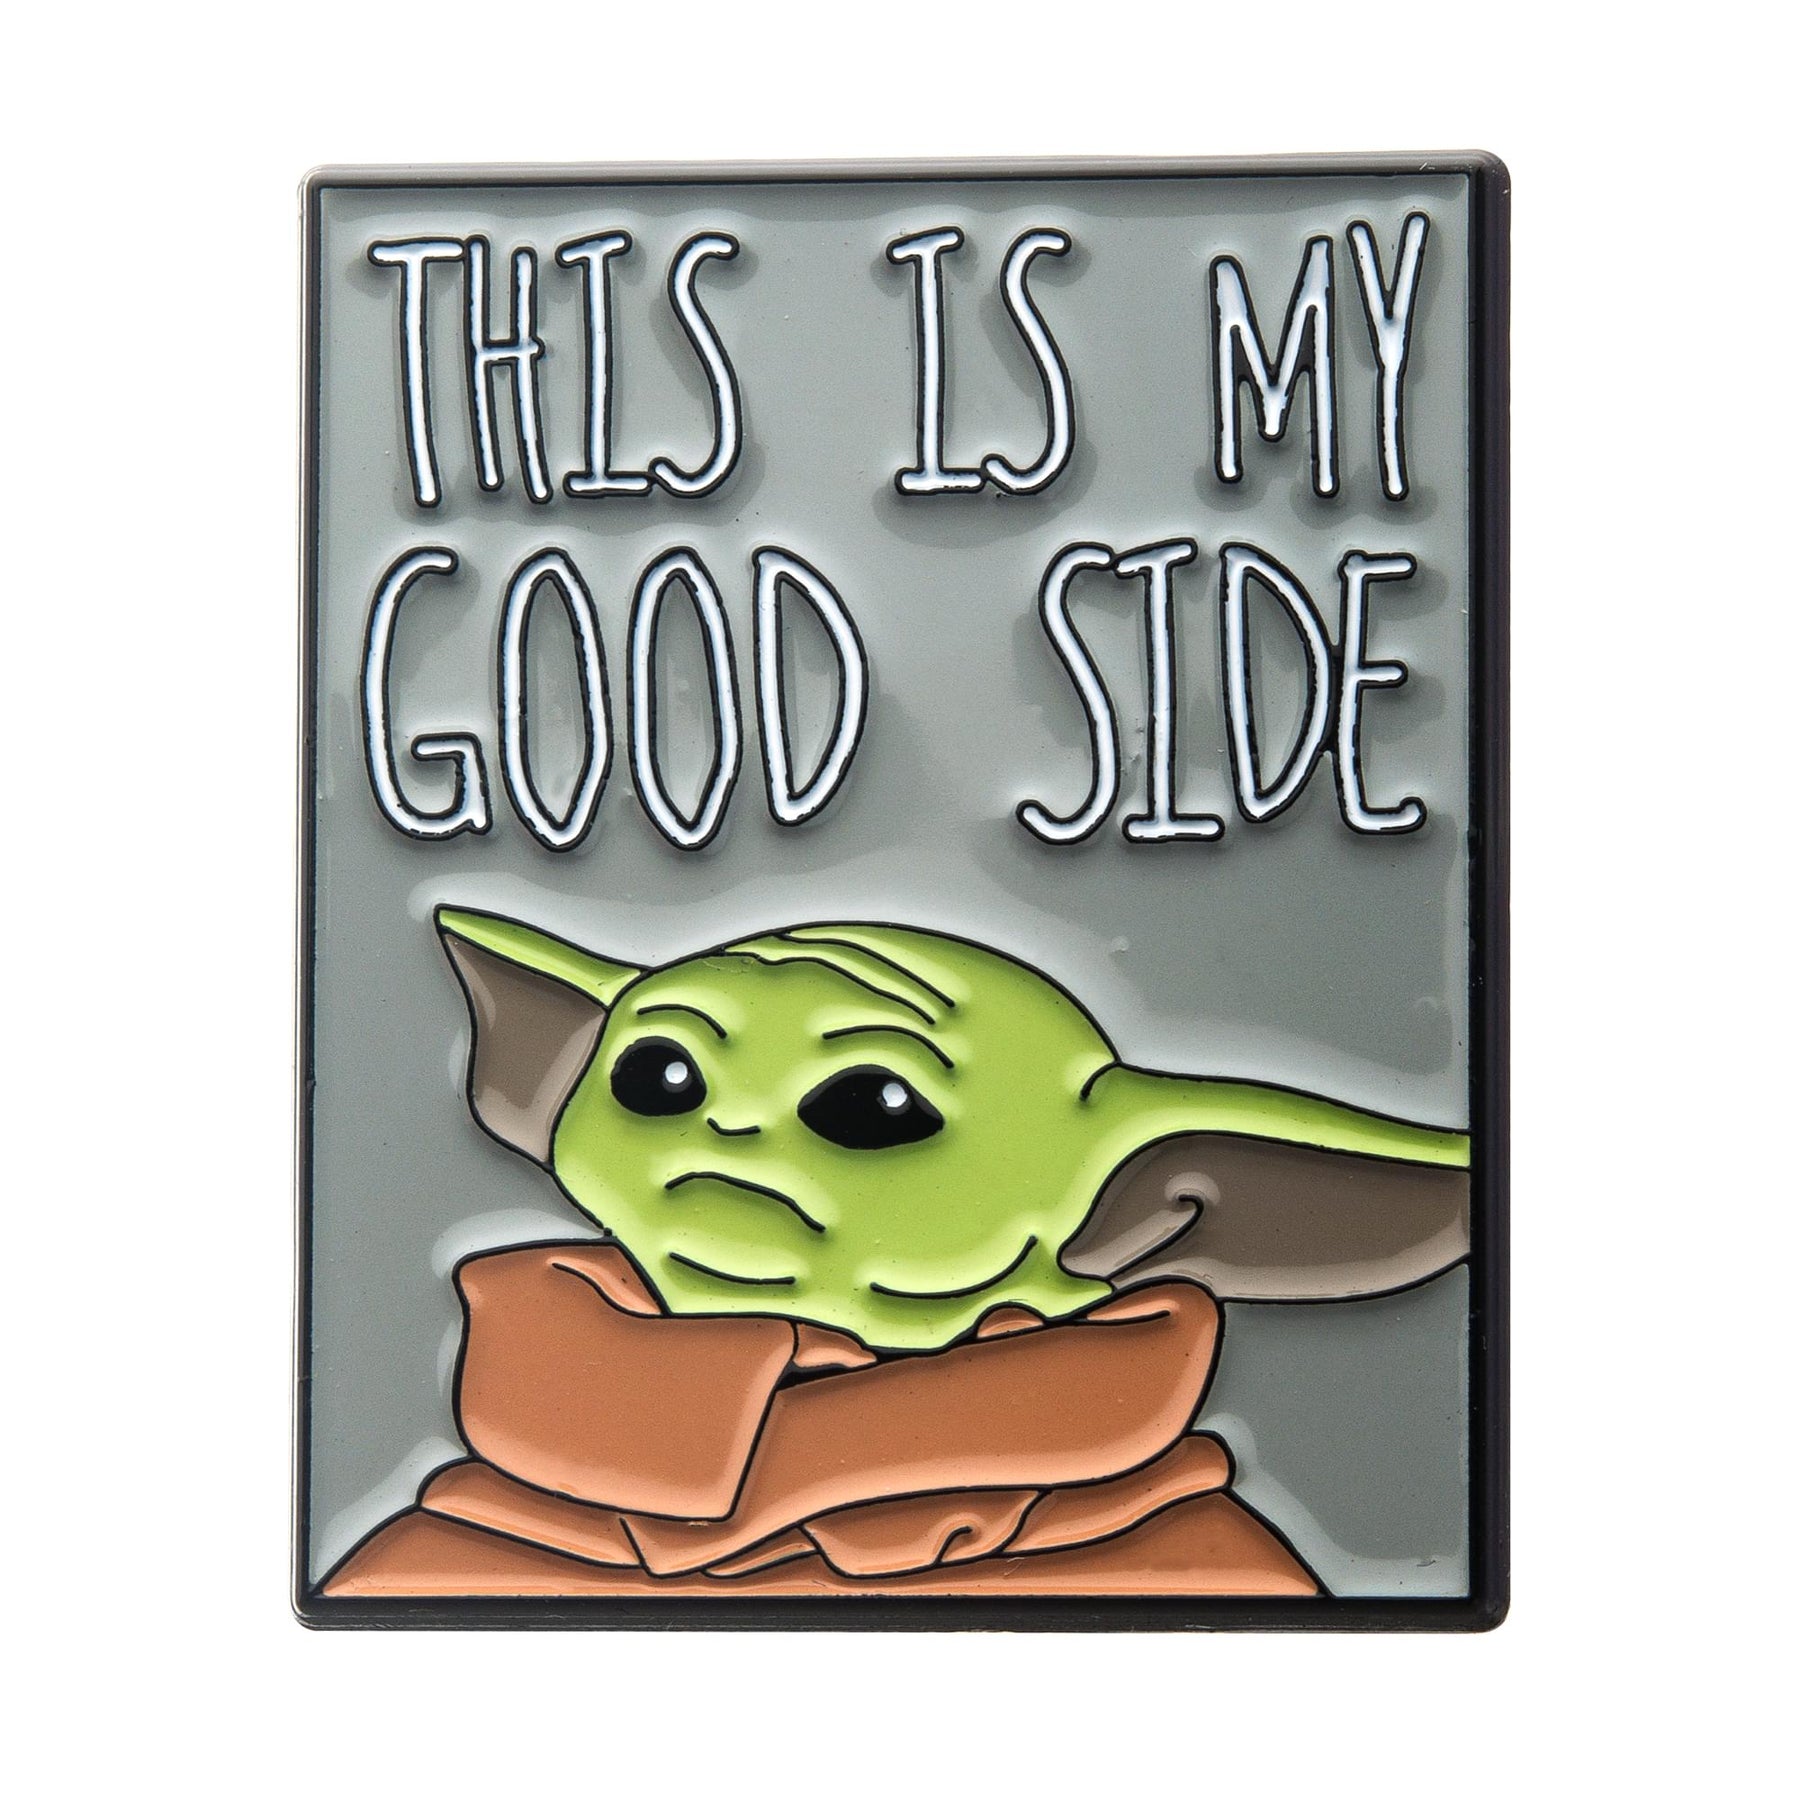 Star Wars: The Mandalorian, The Child "Baby Yoda" Enamel Pin Bundle | Set of 6